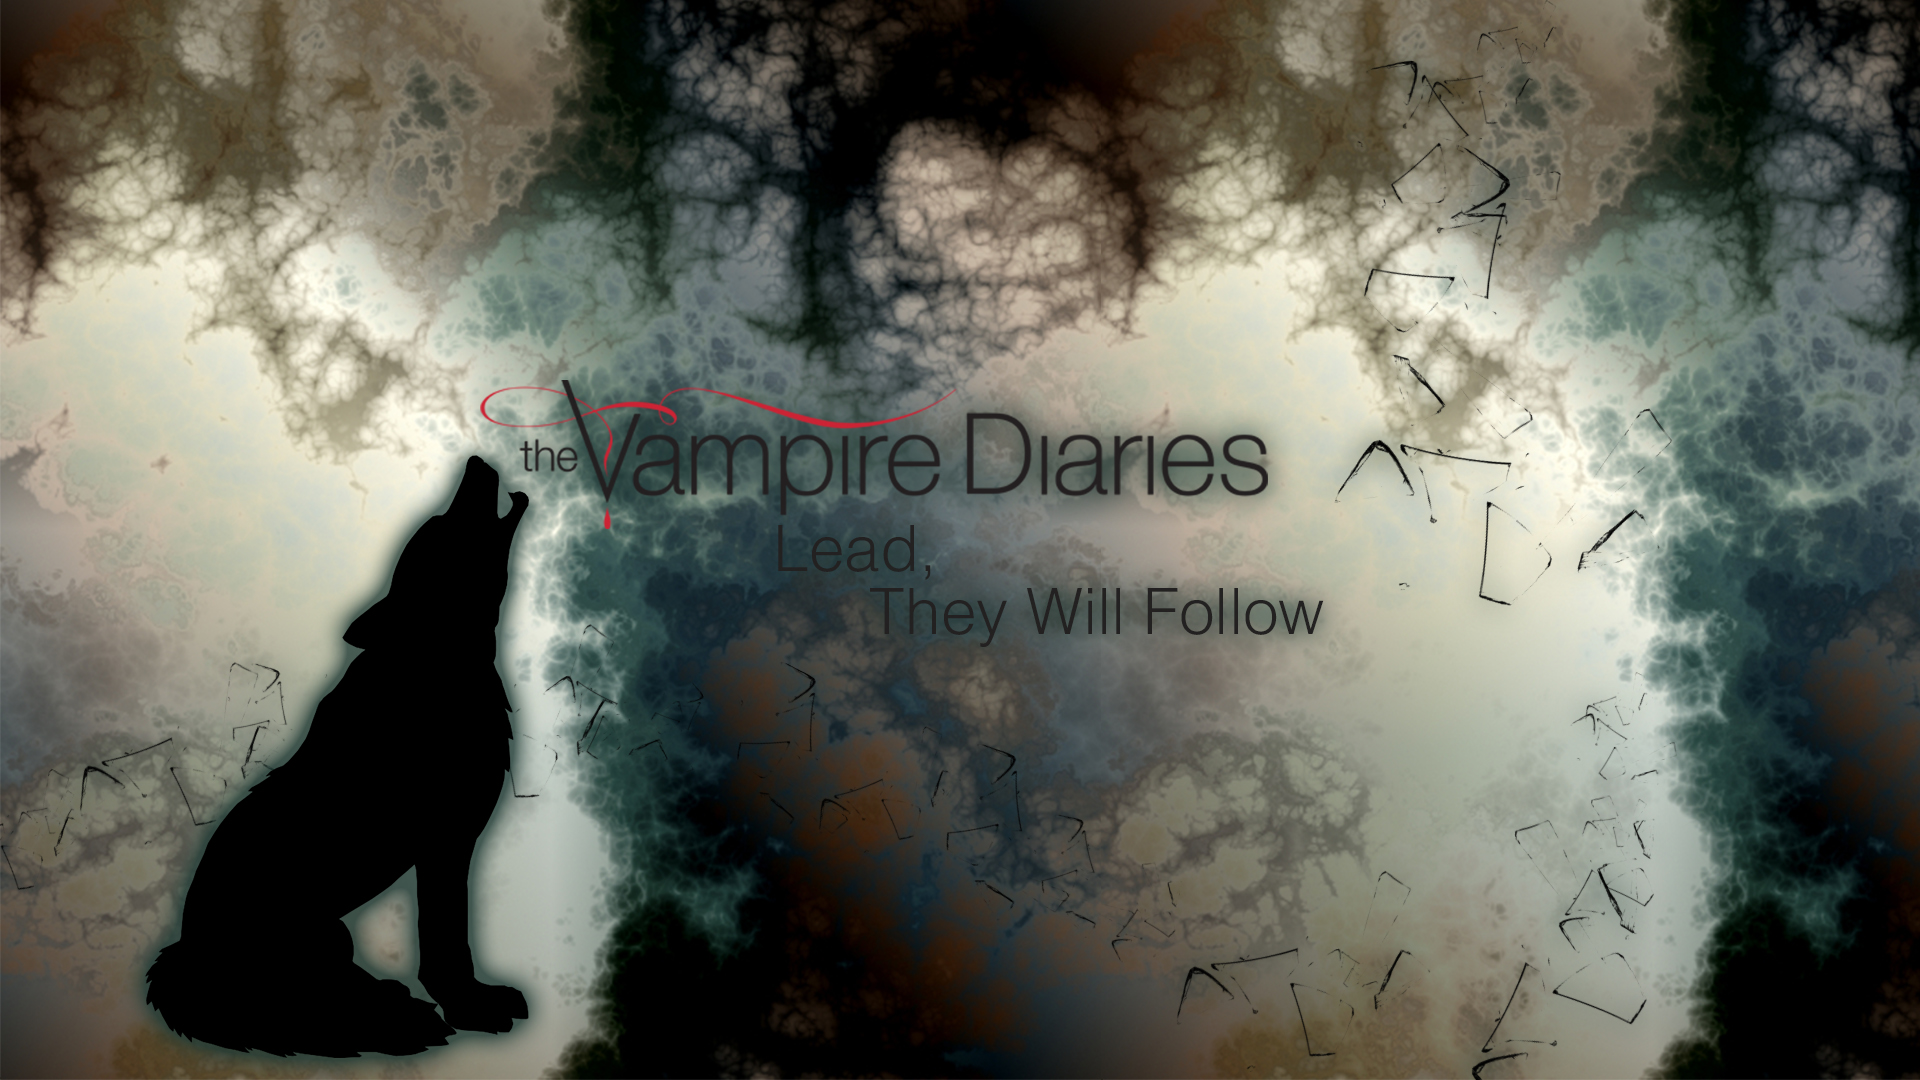 The Vampire Diaries Wallpaper Series - Vampire Diaries Wallpaper 4k - HD Wallpaper 